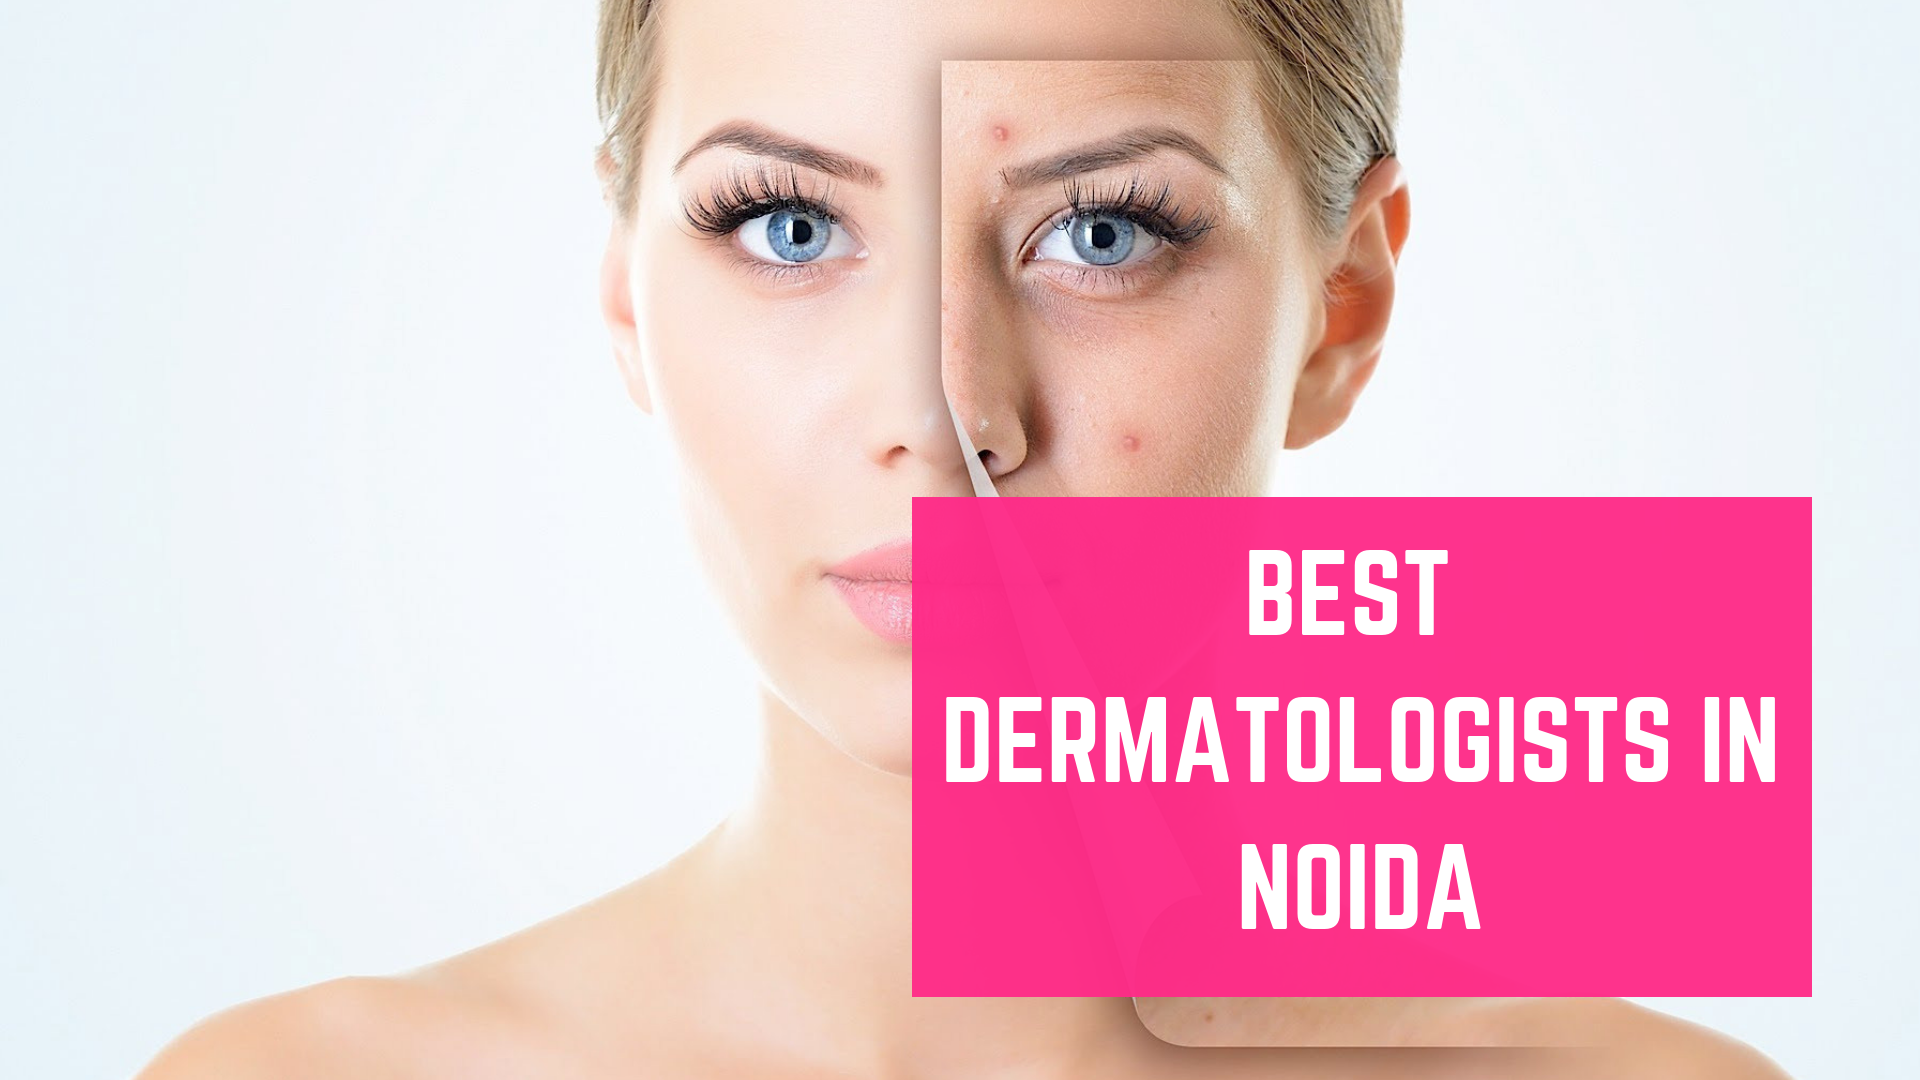 Top 10 Best Dermatologists in Noida - Essencz